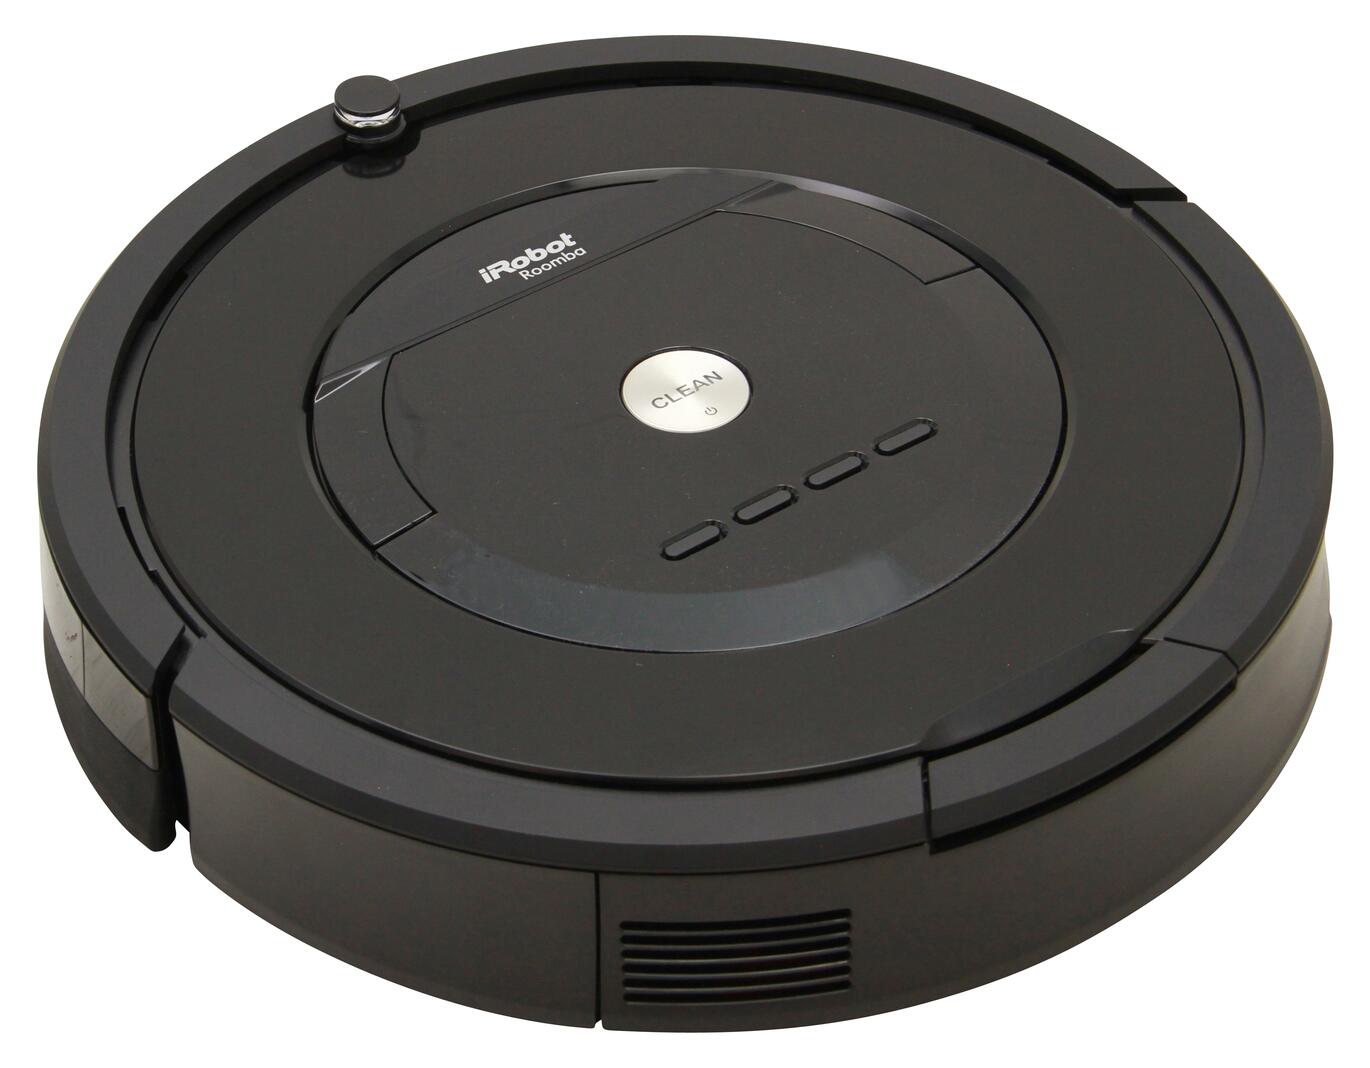 Roomba 875 iRobot